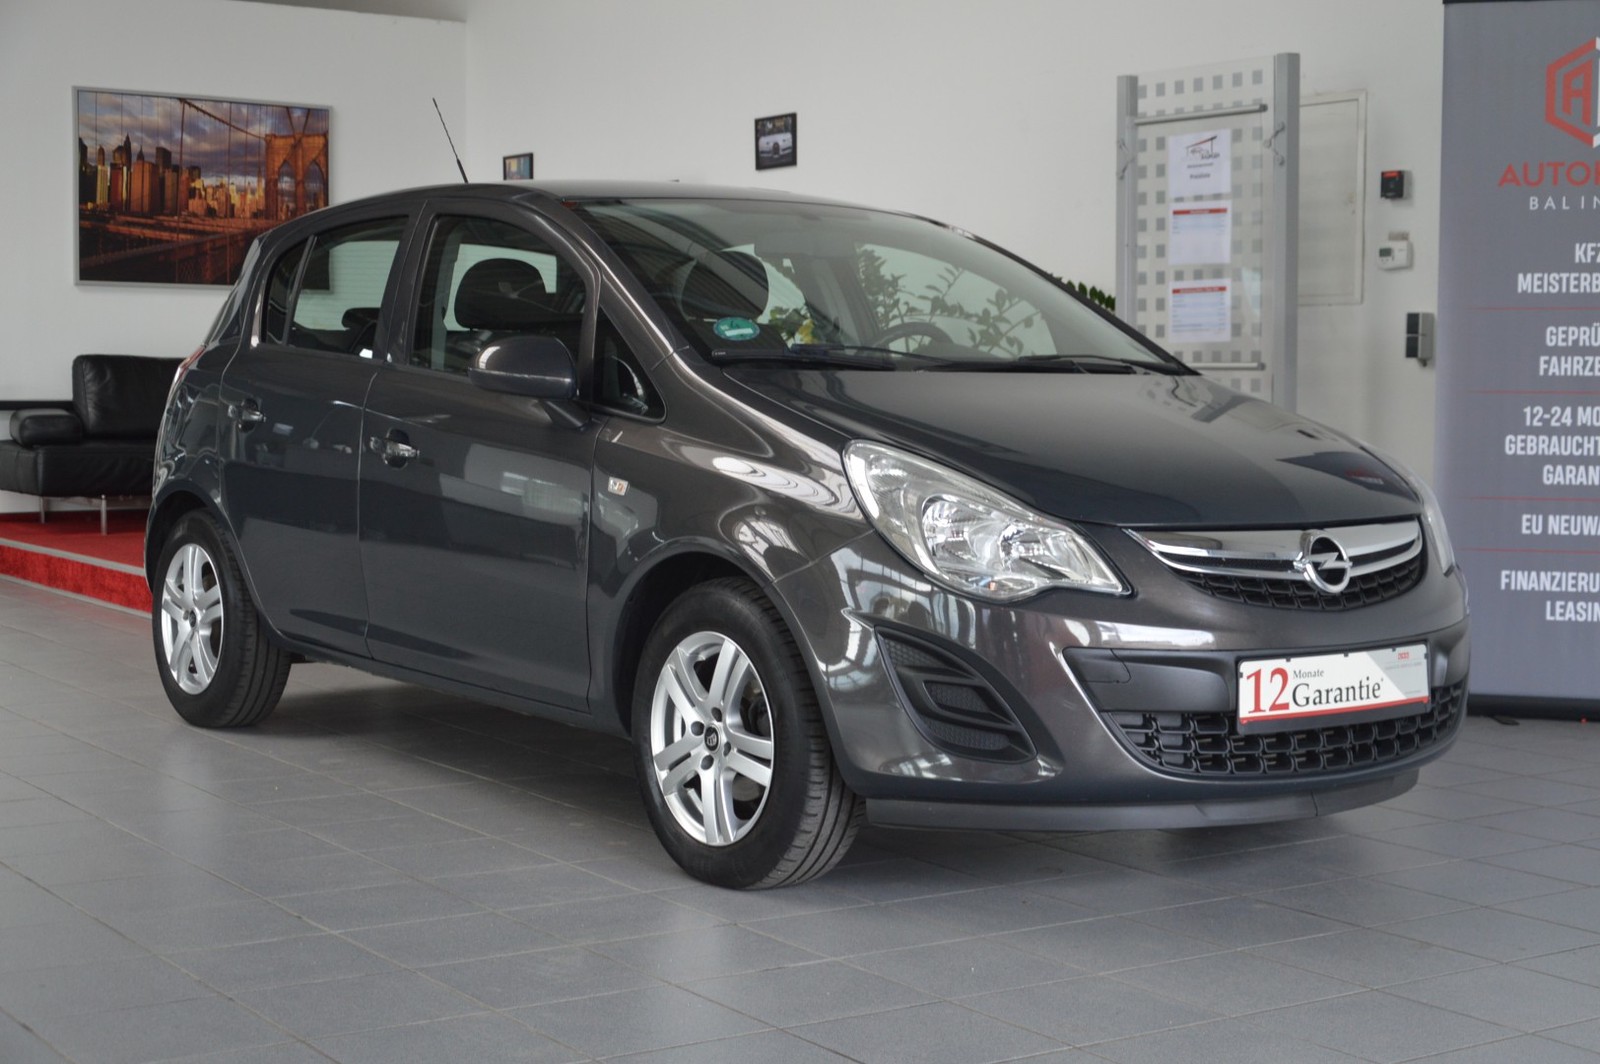 Opel Corsa D Active gebraucht kaufen in Balingen Preis 4990 eur - Int.Nr.:  1673 VERKAUFT